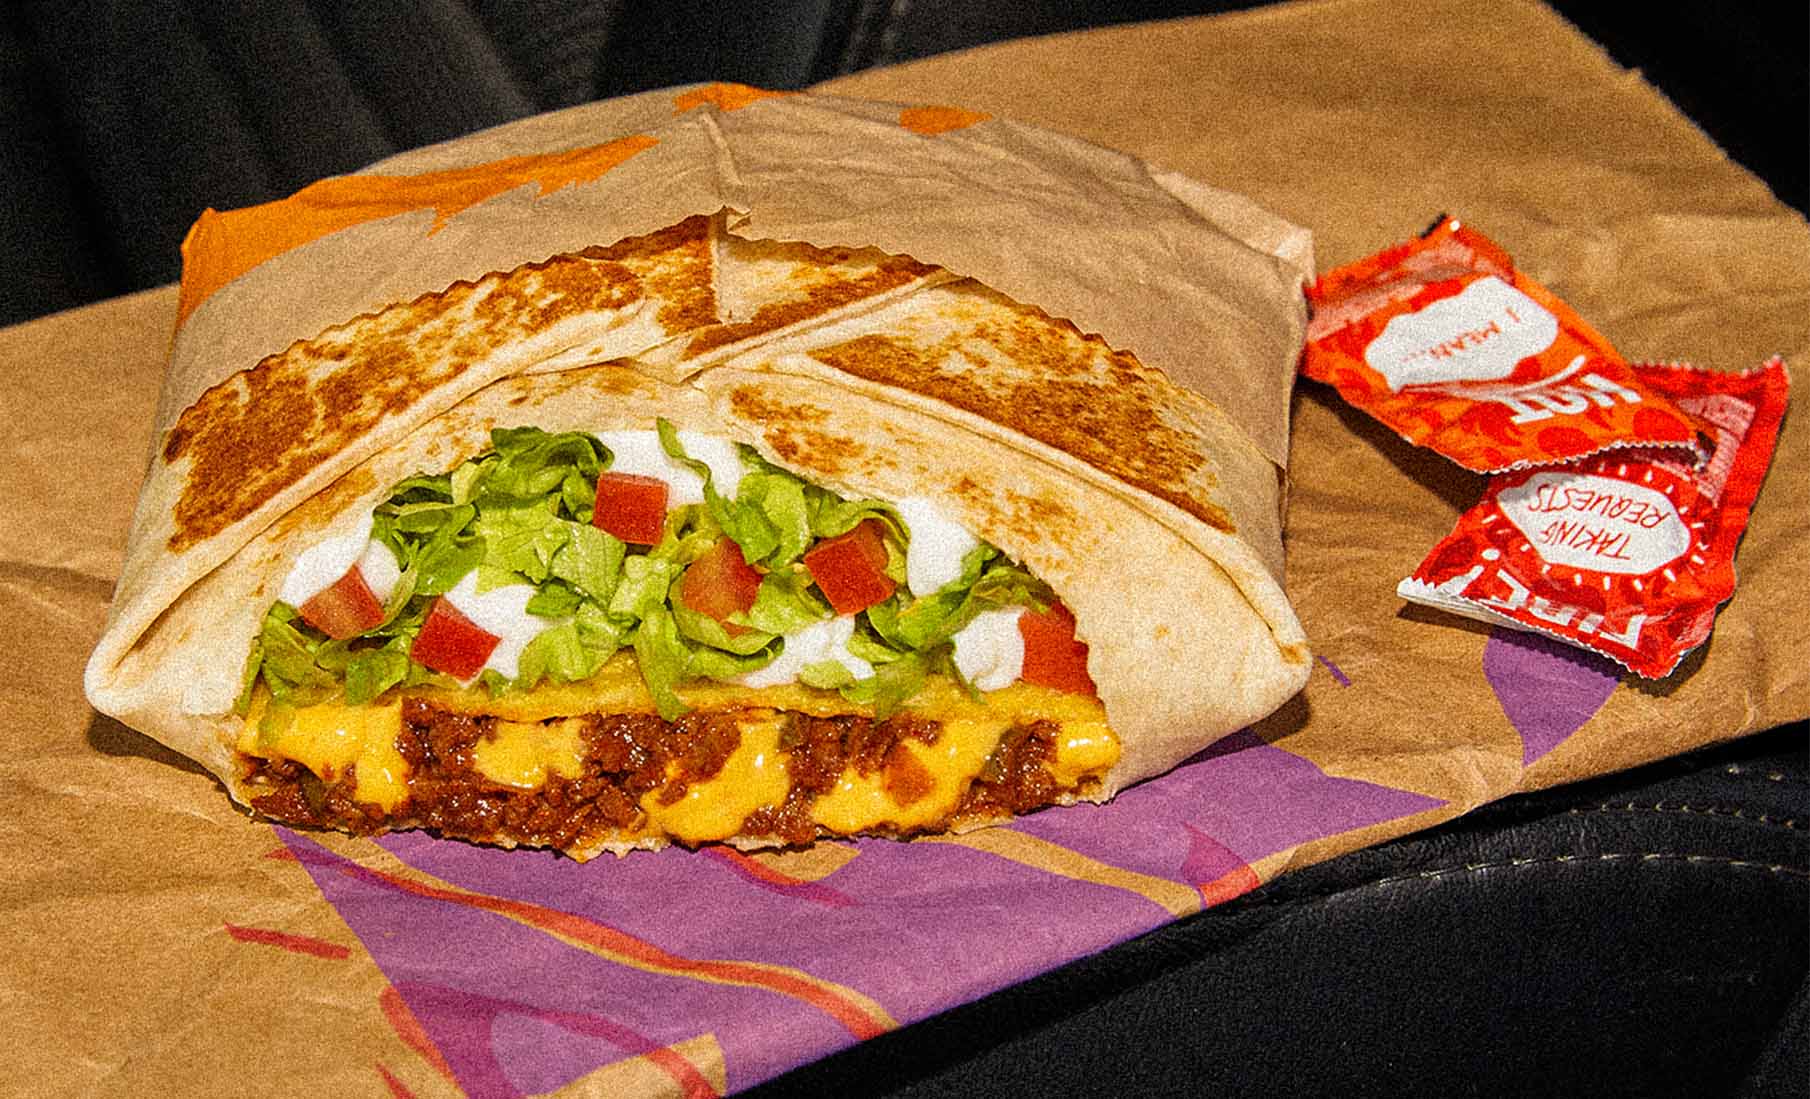 Taco Bell Launches Vegan Nacho Fries Nationwide | PETA